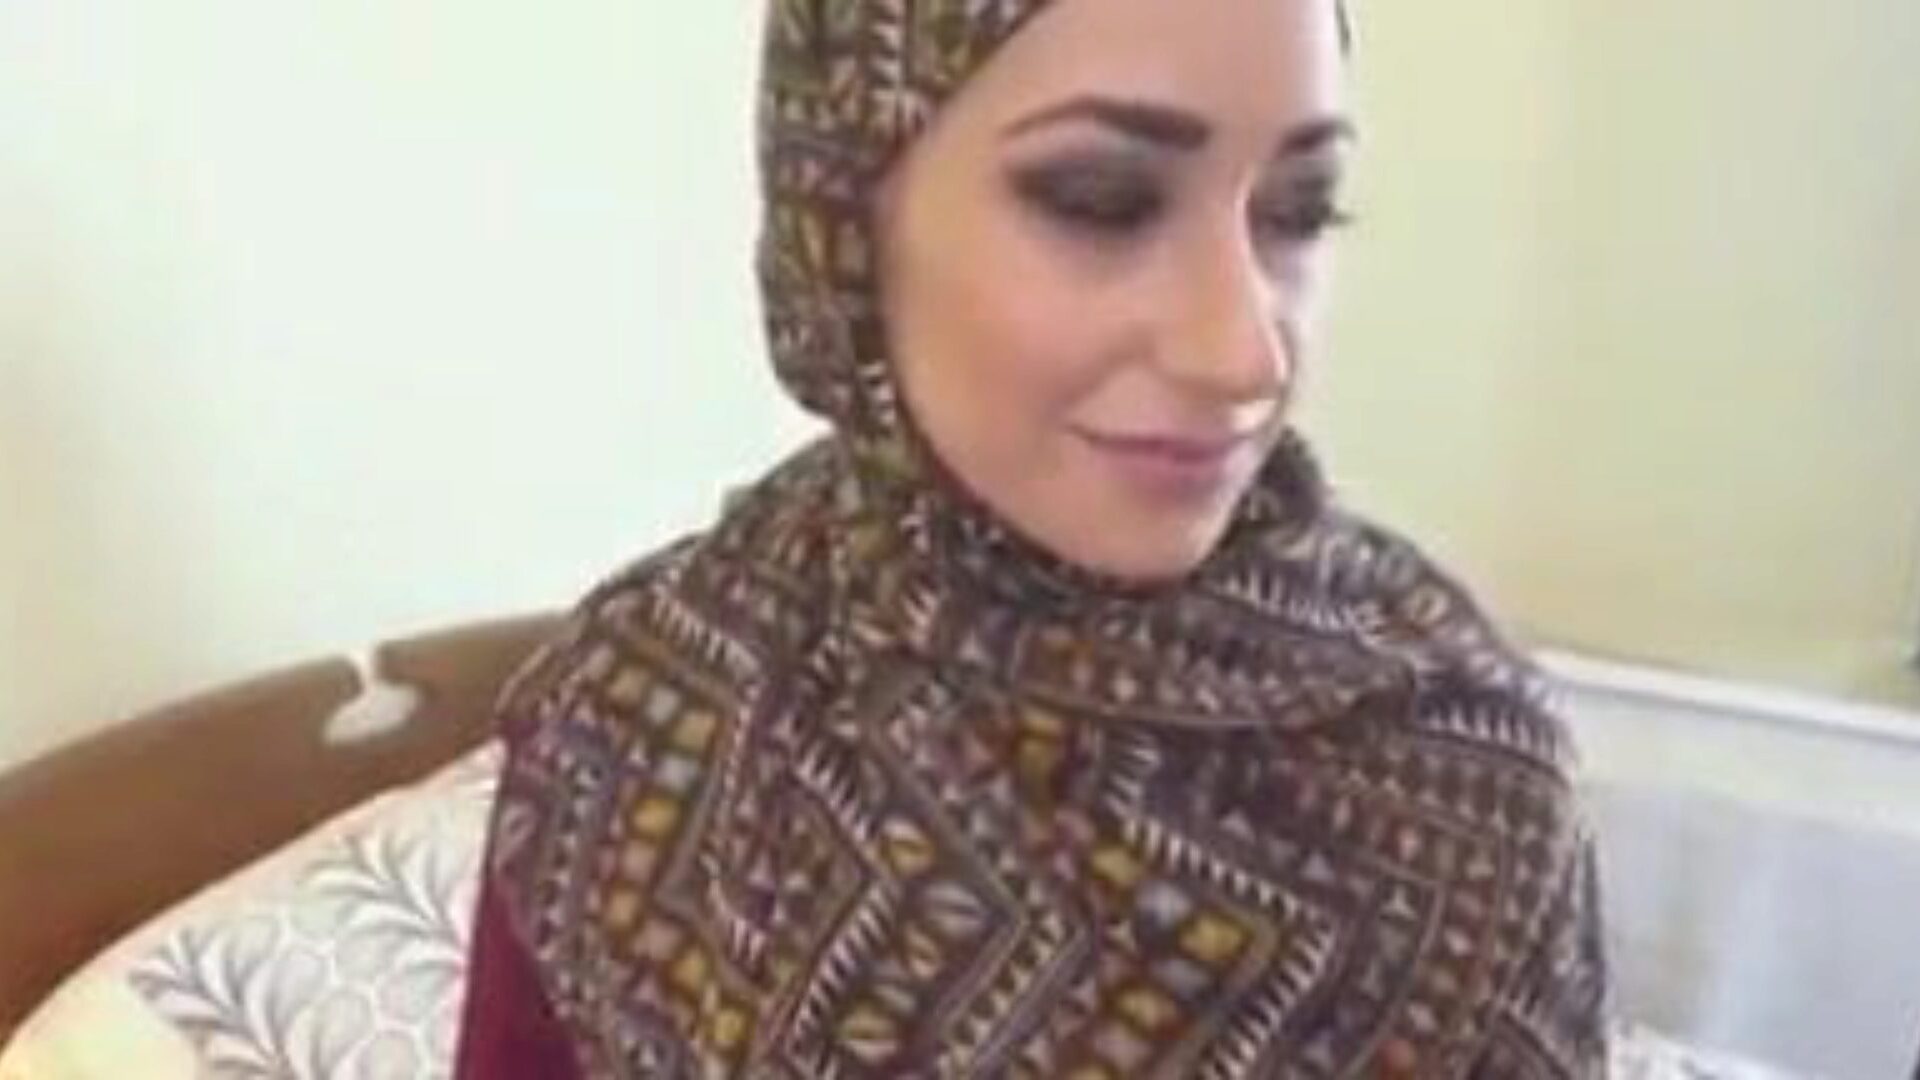 muslim hijab girl fodendo, cd de vídeo pornô de tubo muçulmano gratuito assistir clipe de sexo muçulmano hijab girl fodendo no xhamster, o maior site de tubo de fuckfest com toneladas de tubo muçulmano árabe gratuito e clipes de hijab porno no youtube